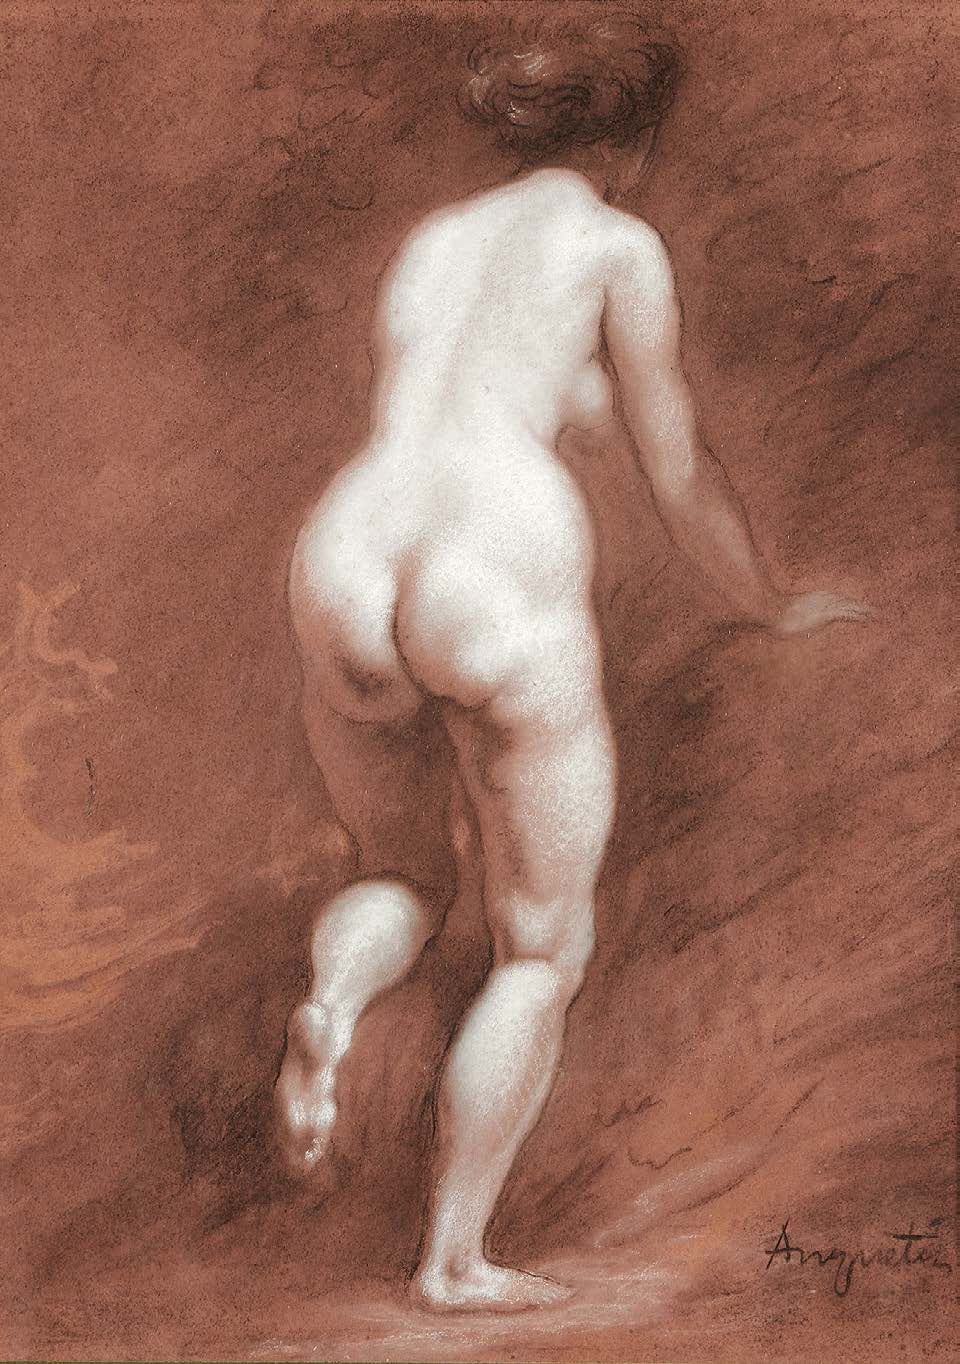 LOUIS ANQUETIN (1861-1932) 从后面看裸体女人
白粉笔和木炭，右下角签名。
64 x 46 cm
与同名油画相比，83 x 53 cm。